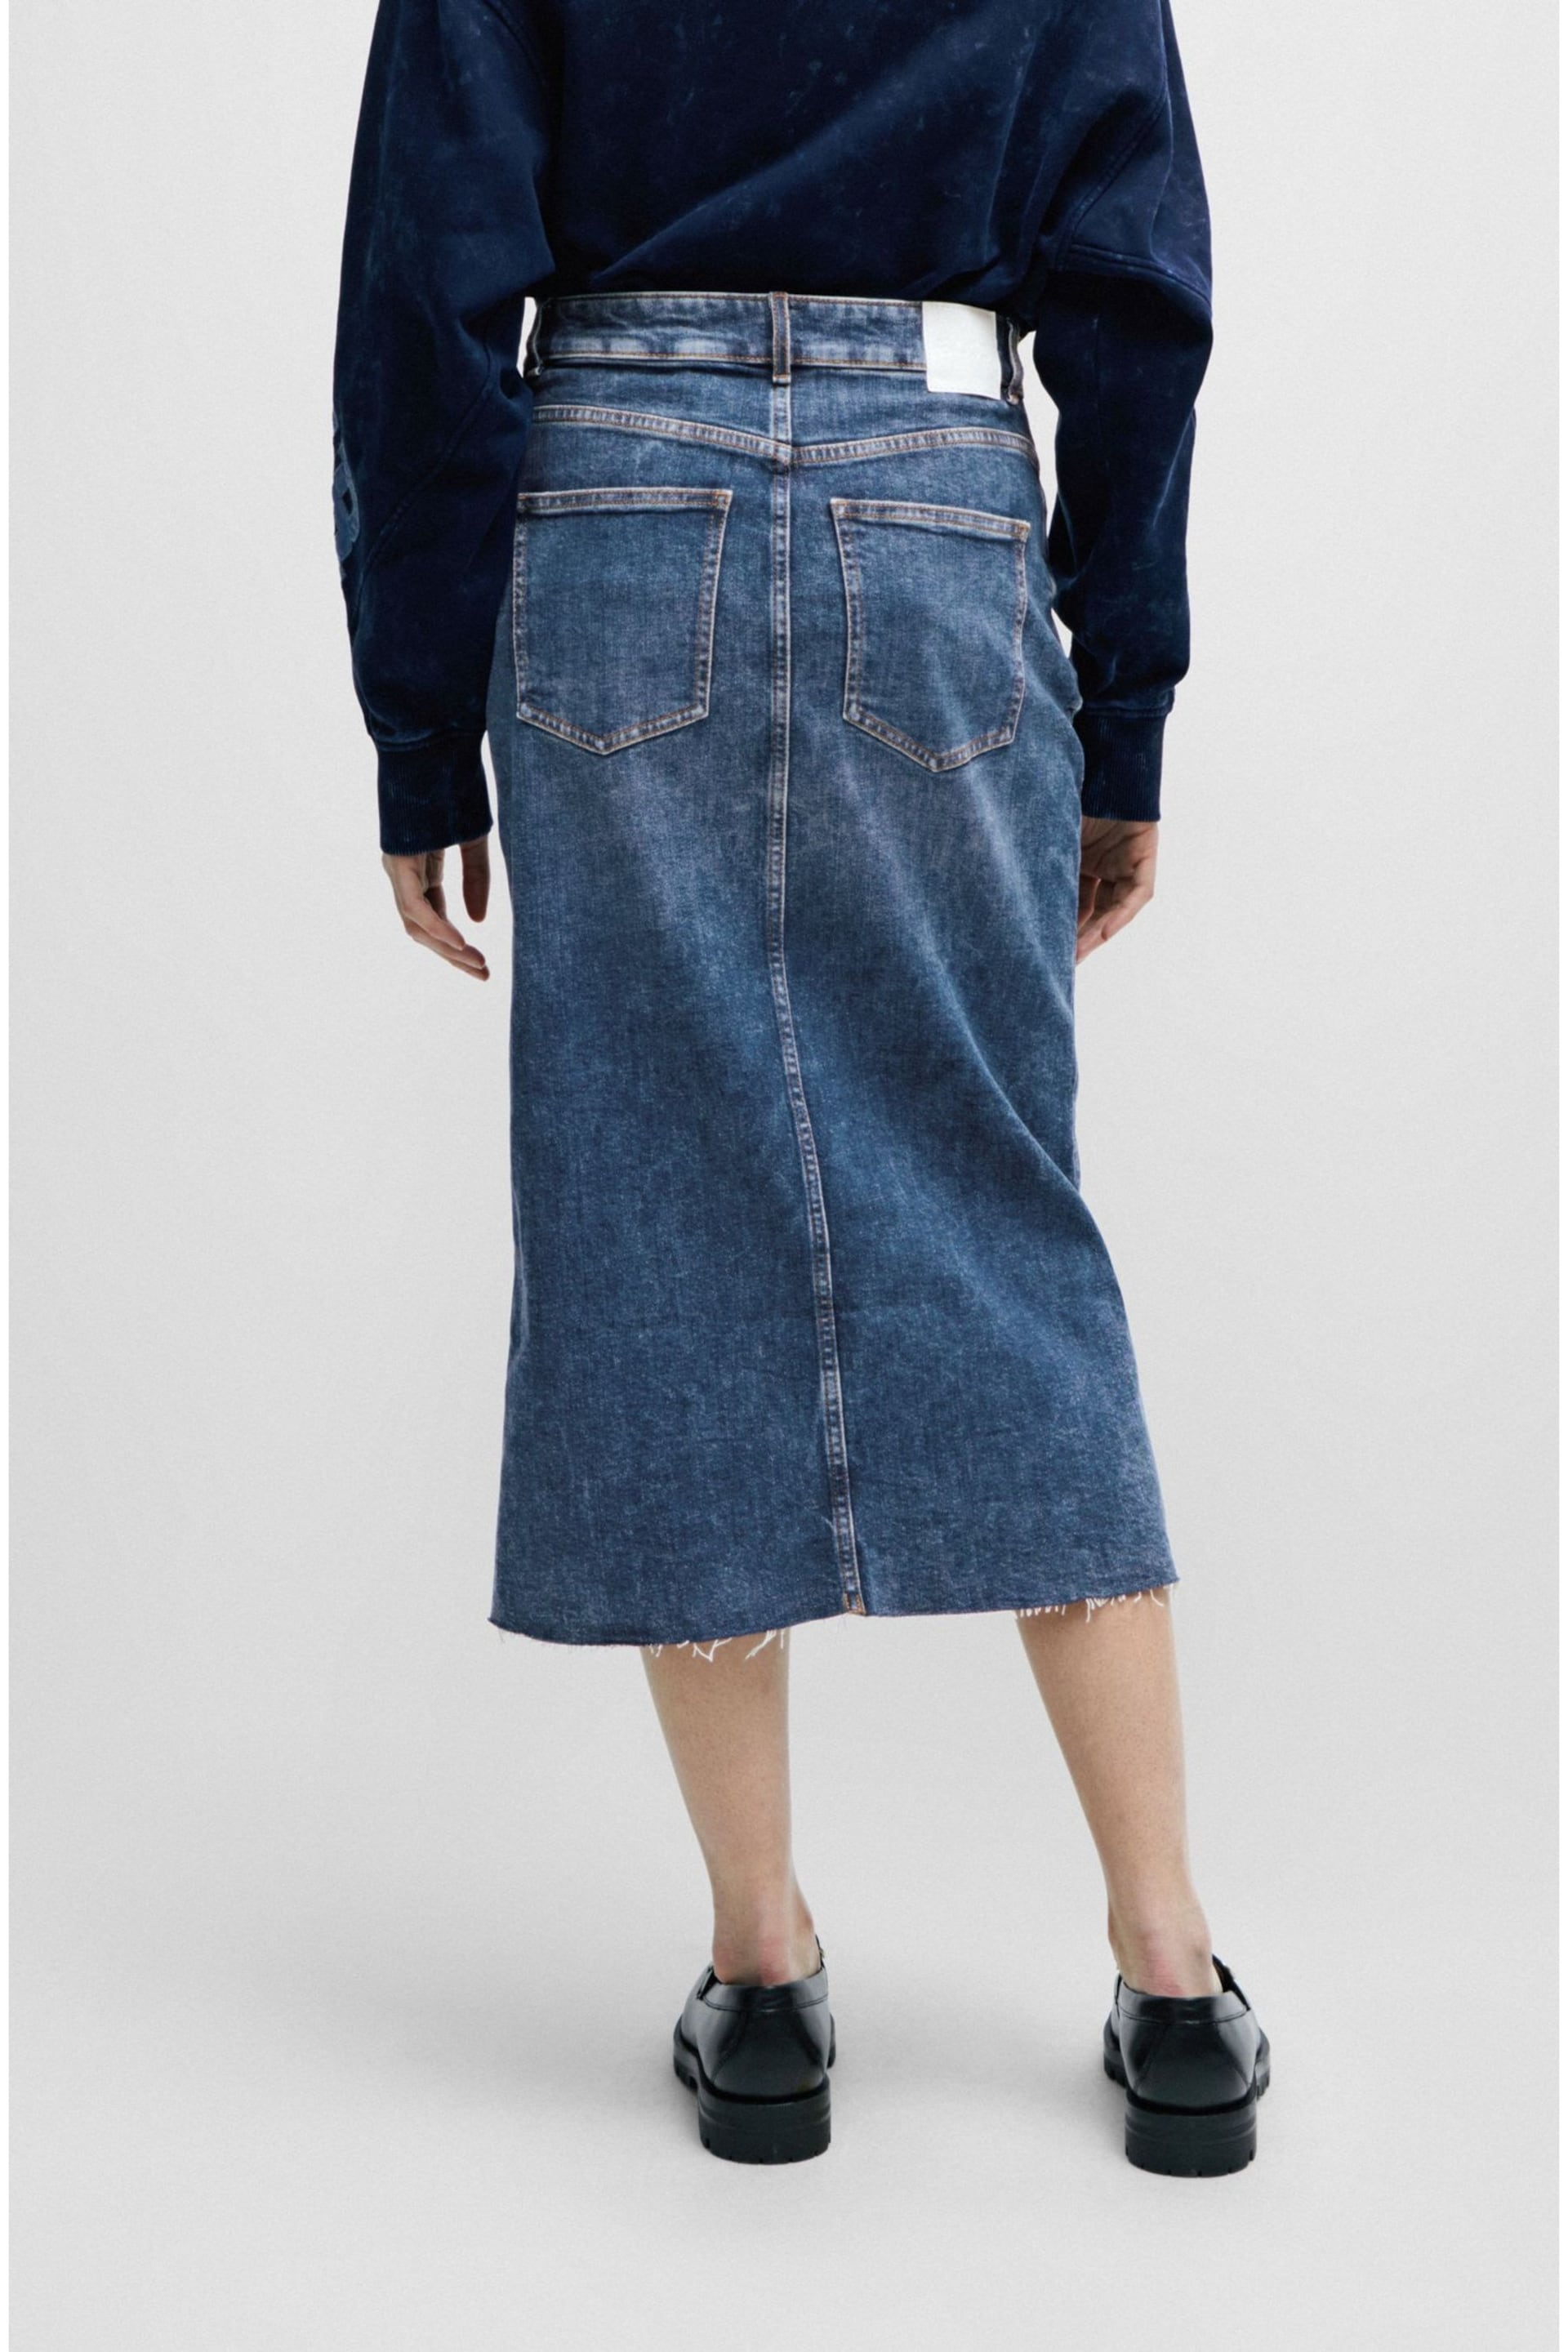 BOSS Mid Blue Slim Fit Stretch Midi Denim Skirt - Image 3 of 5